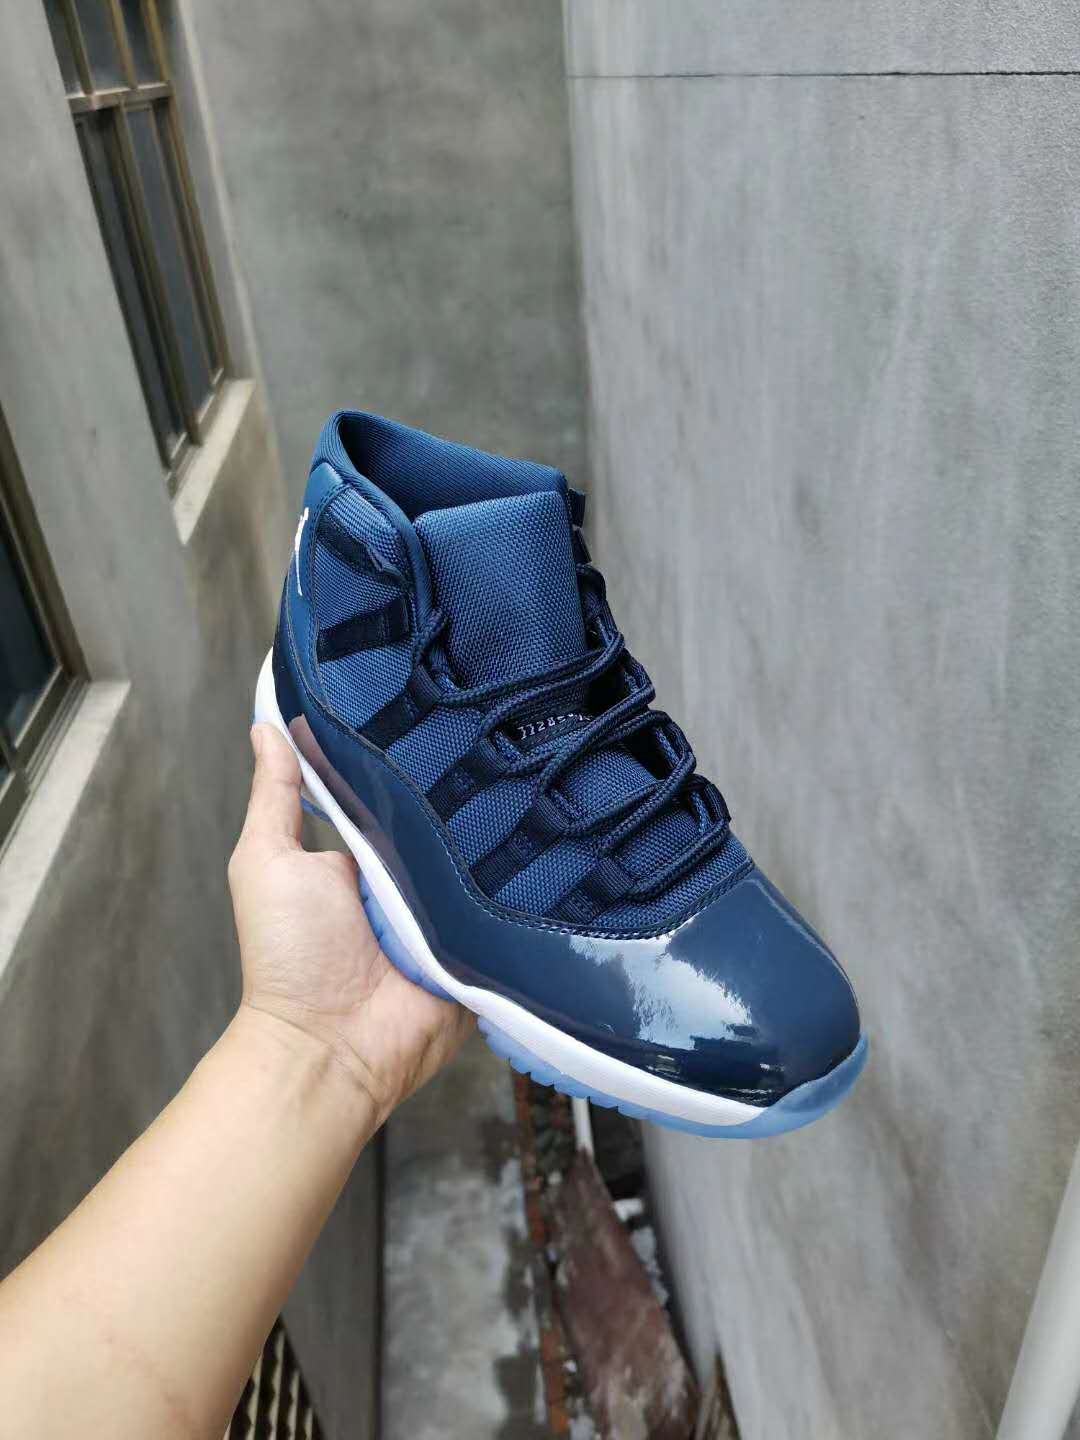 New Men Air Jordan 11 Retro Navy Blue Shoes - Click Image to Close